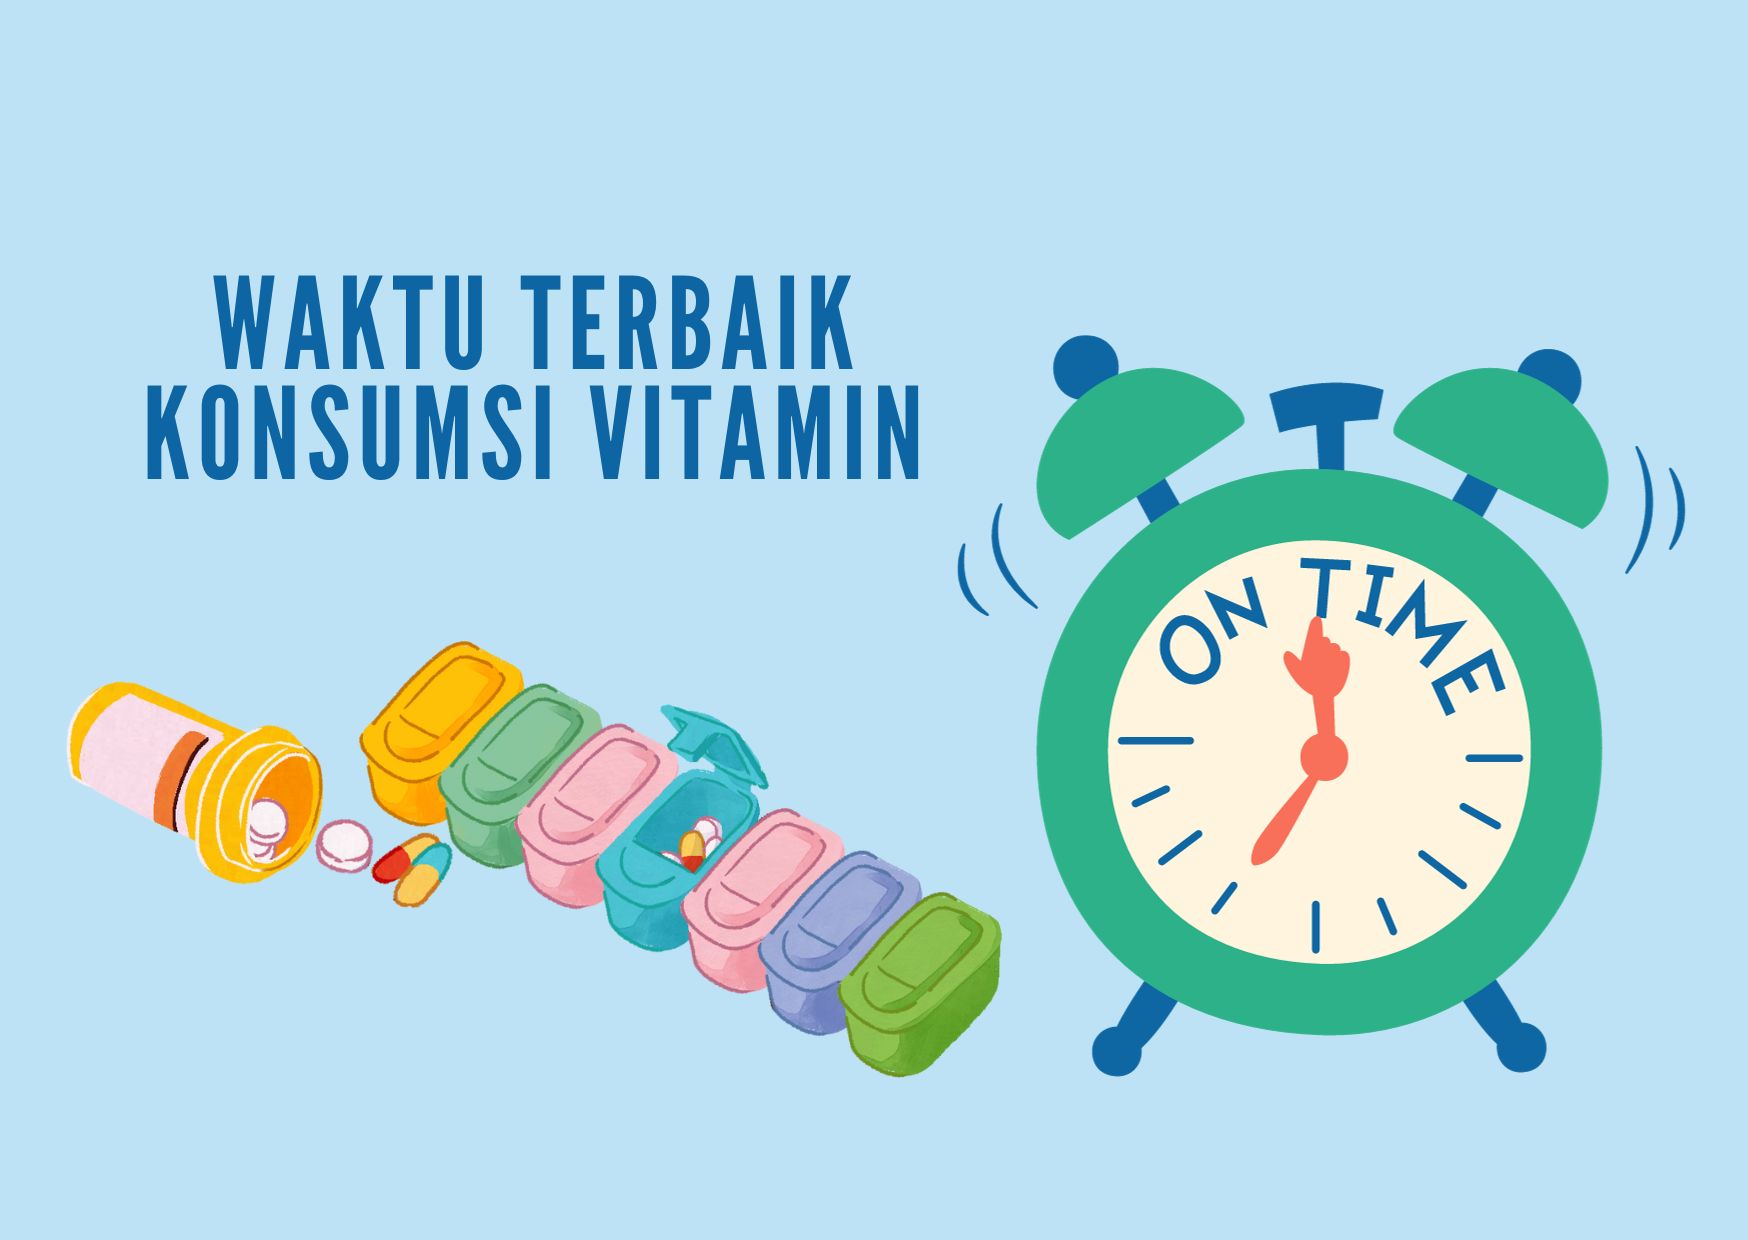 Kapankah Waktu yang Tepat Untuk Minum Vitamin A, B, C, D, E dan K